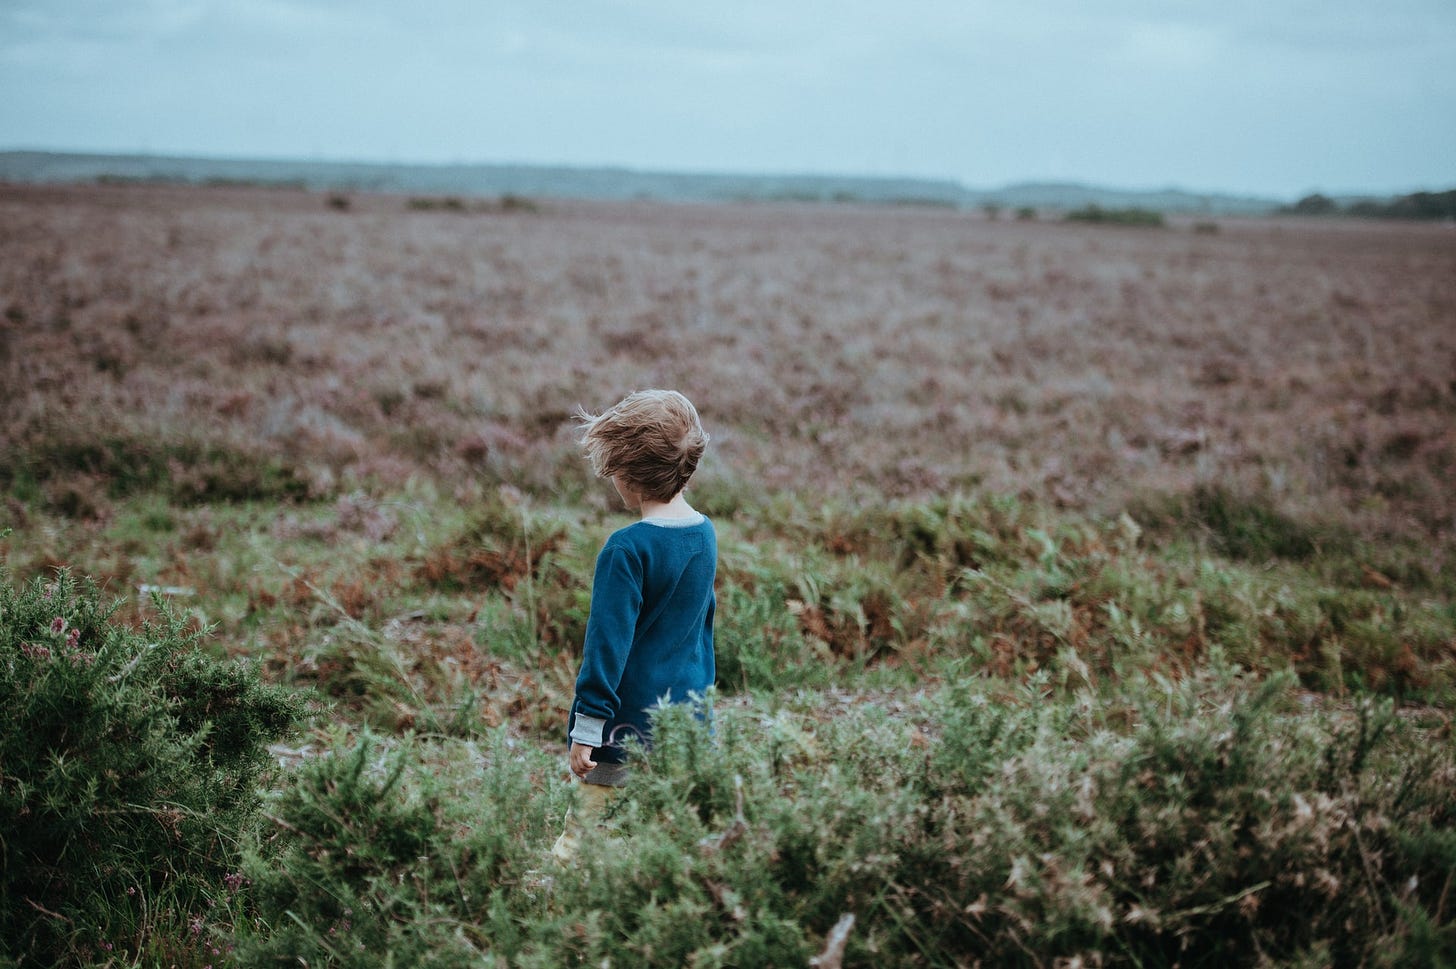 Child alone in the field